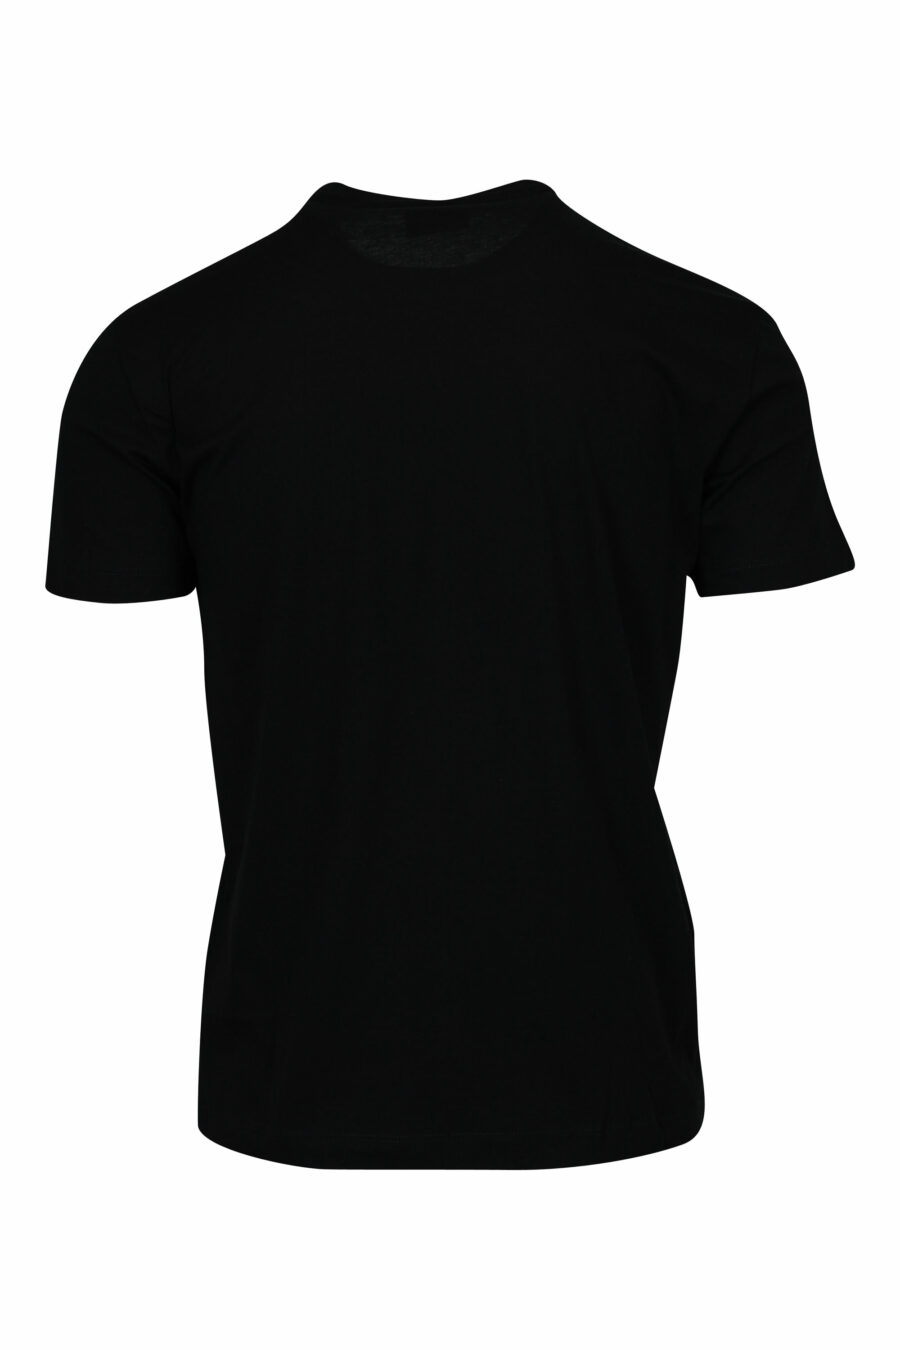 Camiseta negra con minilogo "lux identity" negro en placa dorada - 8058947471980 1